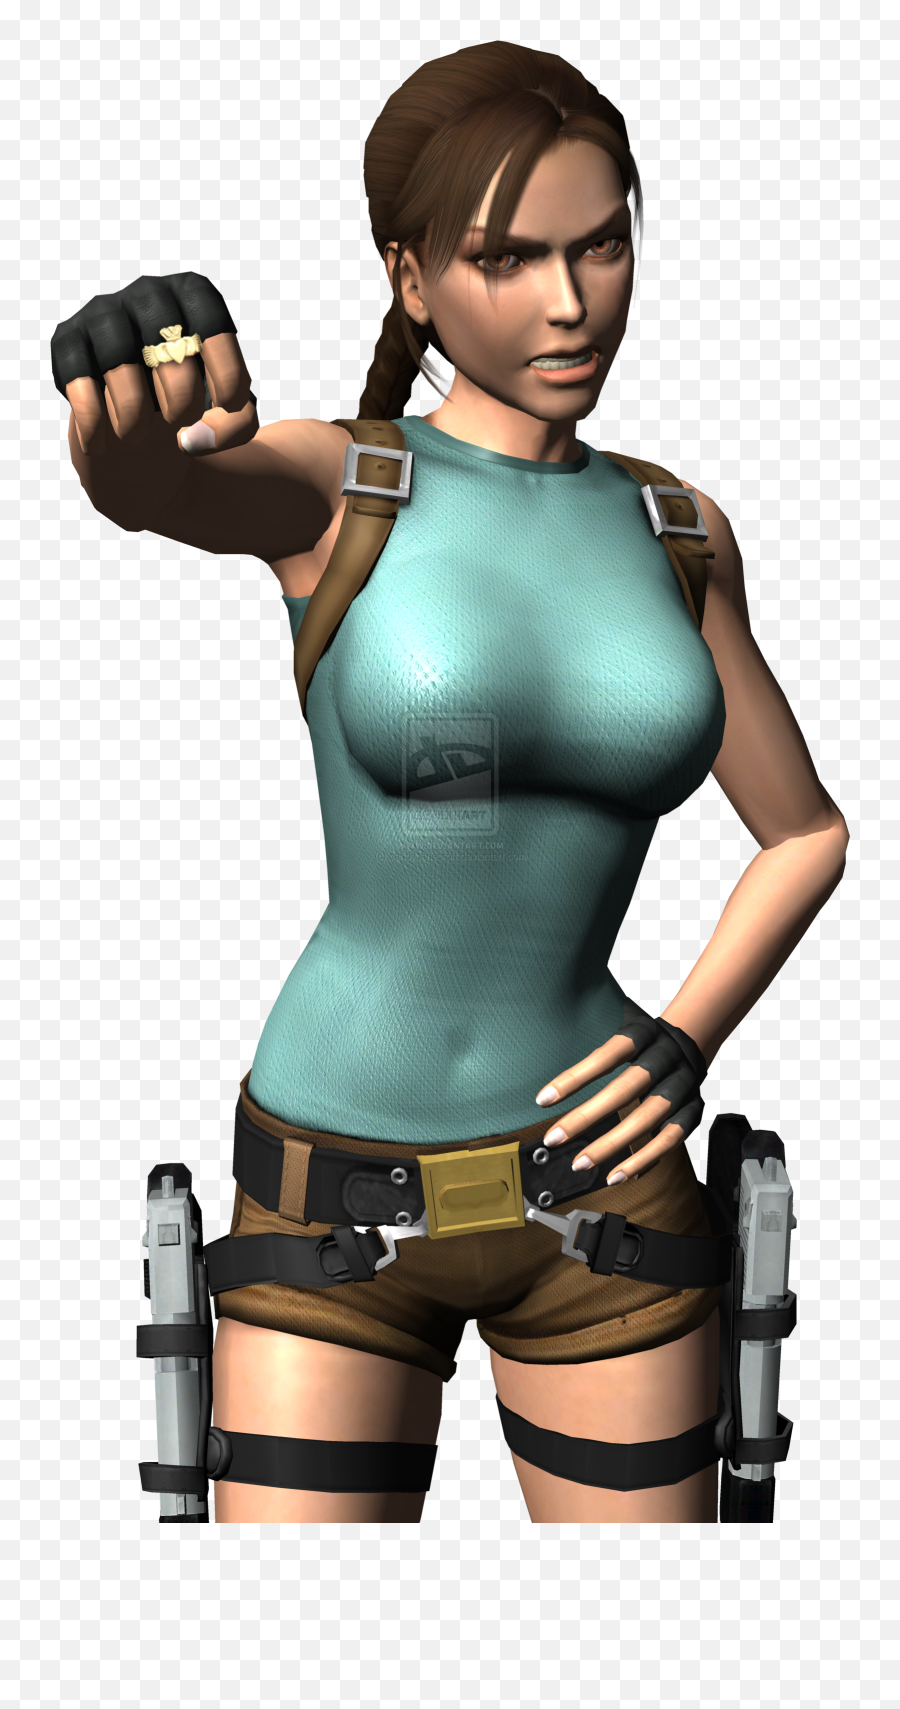 Lara Croft - Lara Croft Png,Lara Croft Transparent